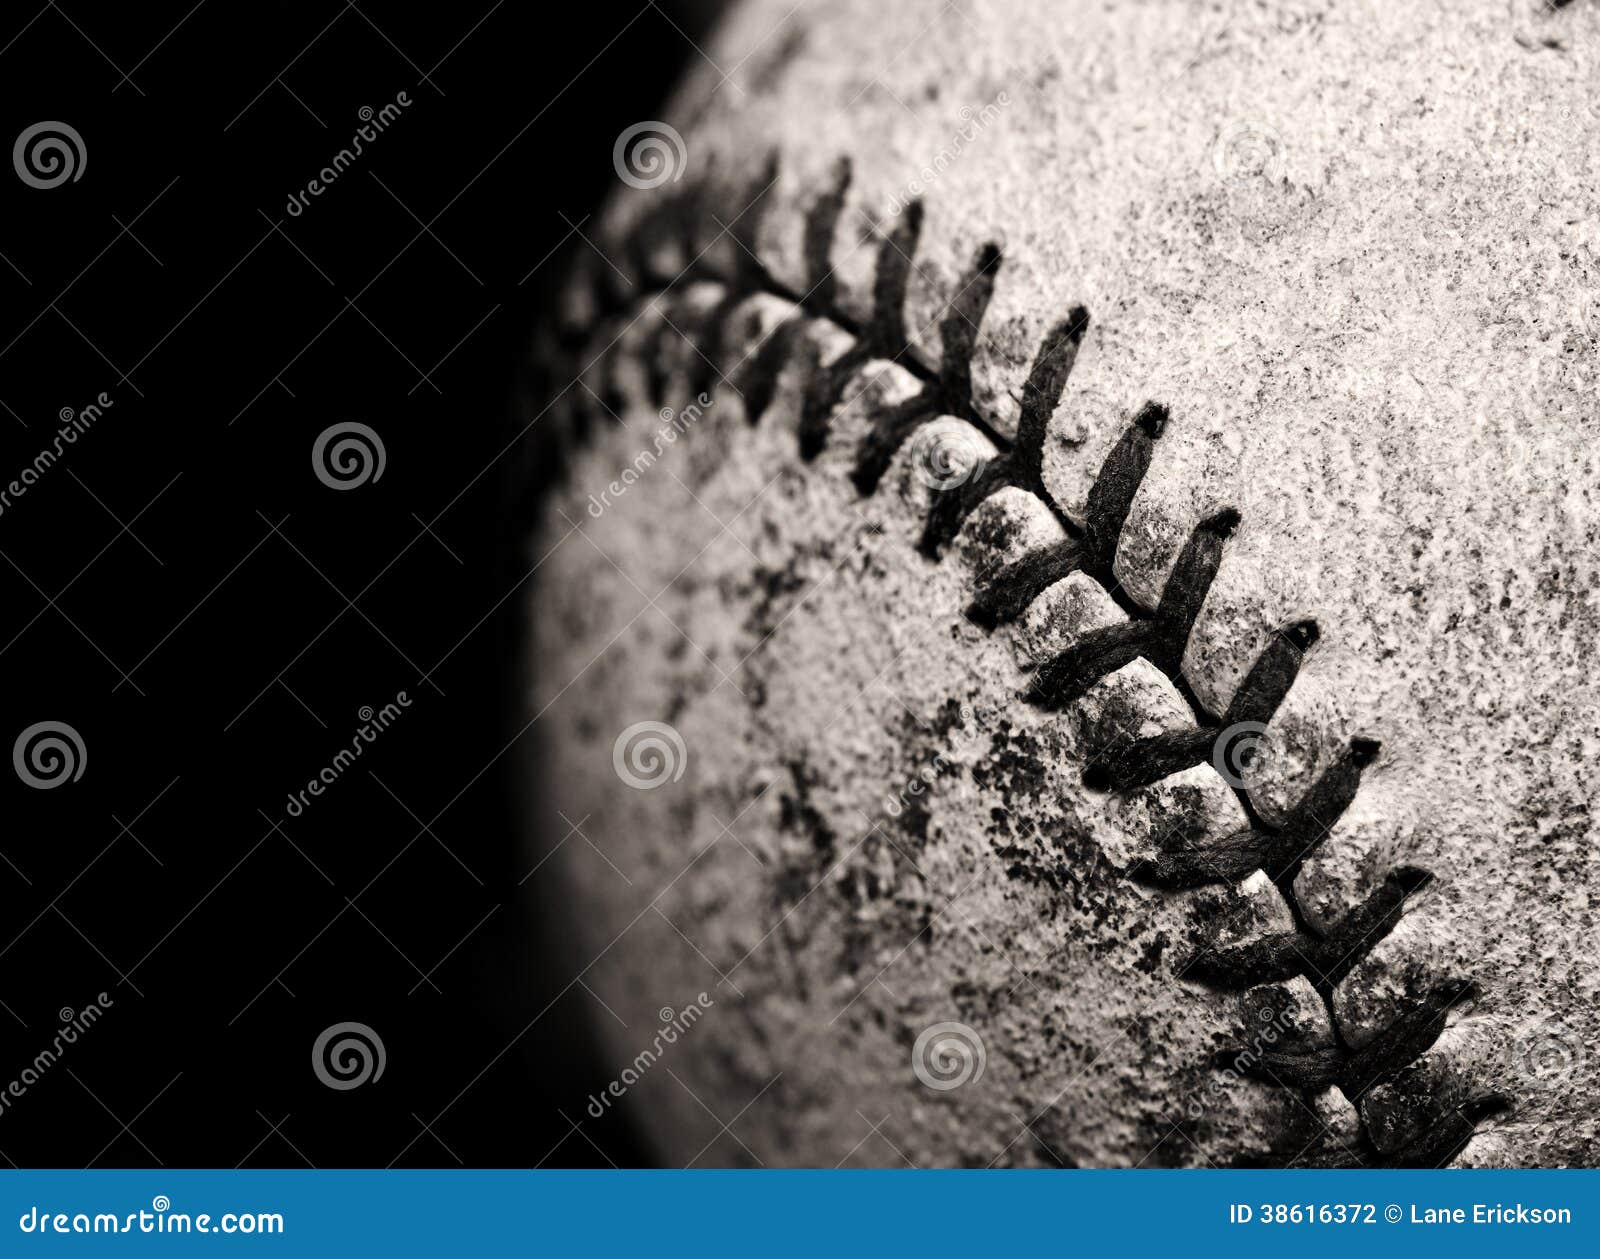 old worn baseball